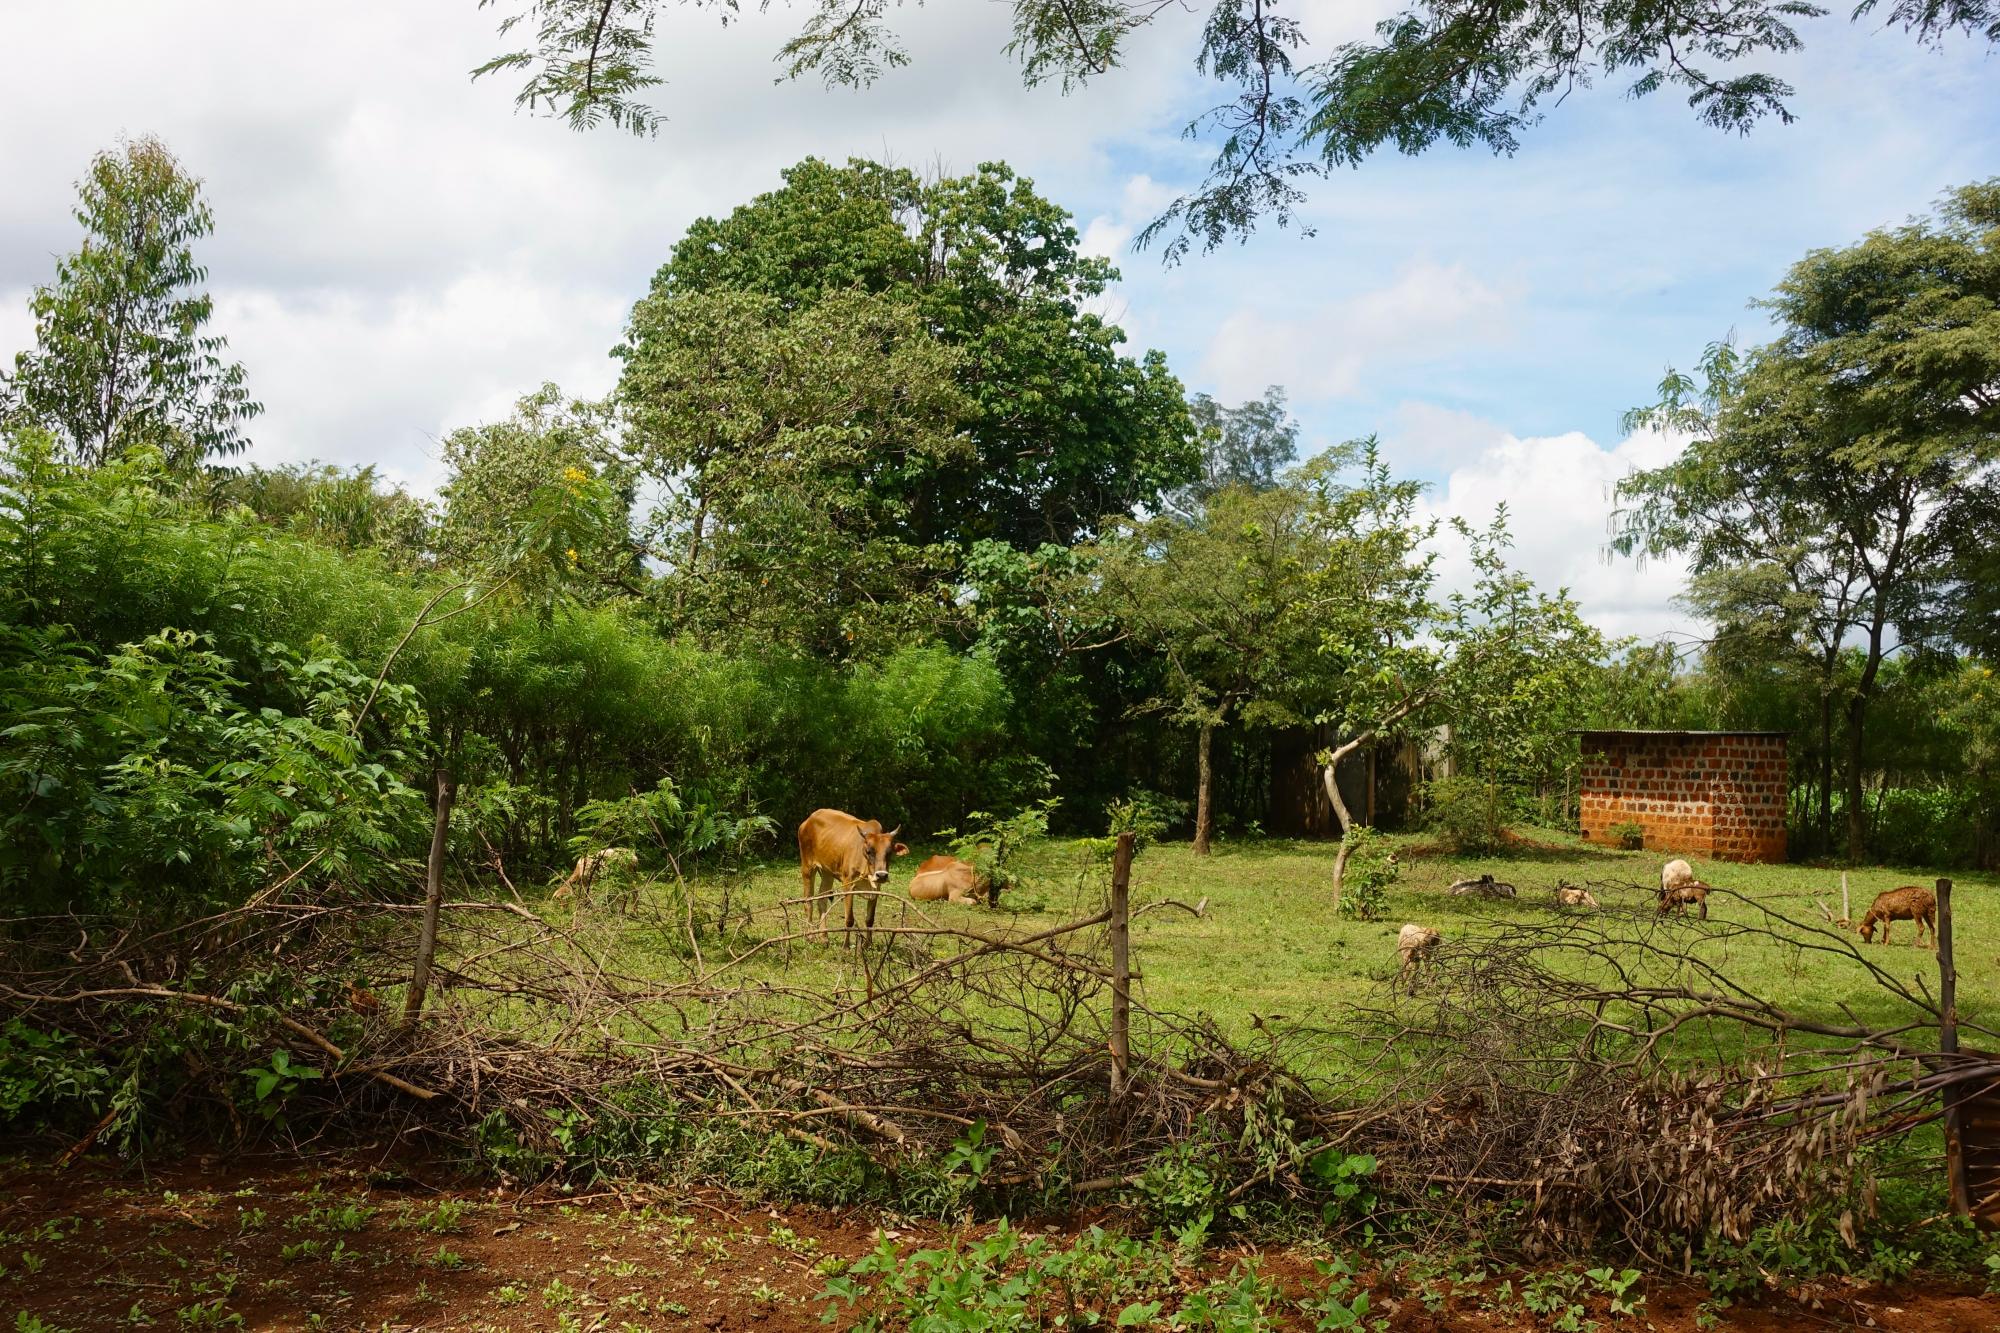 Photo 6: Cows grazing.